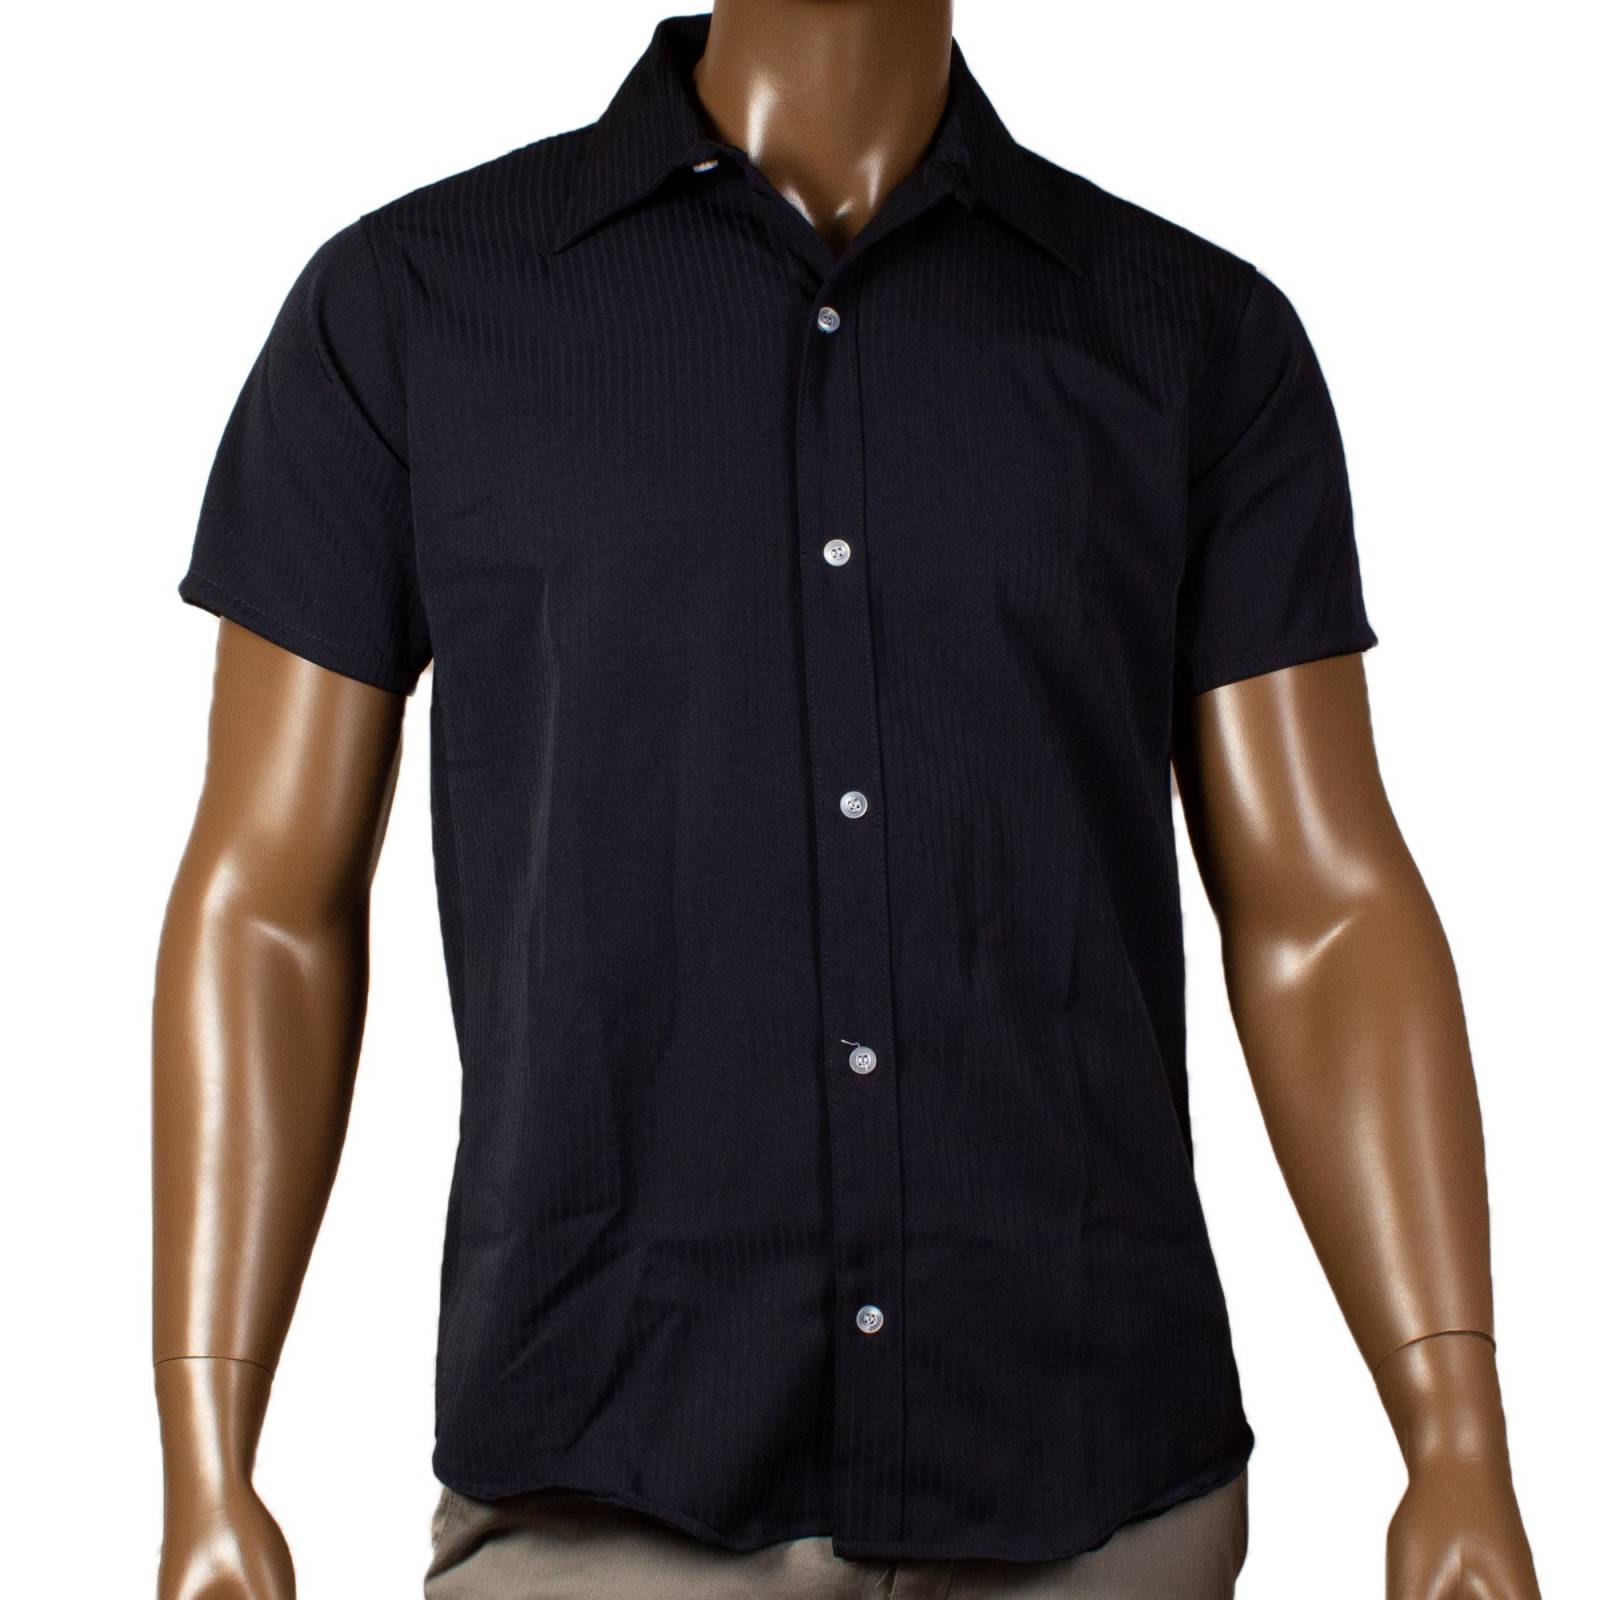 Camisa slim fit hombre manga corta casual varios colores - Sears